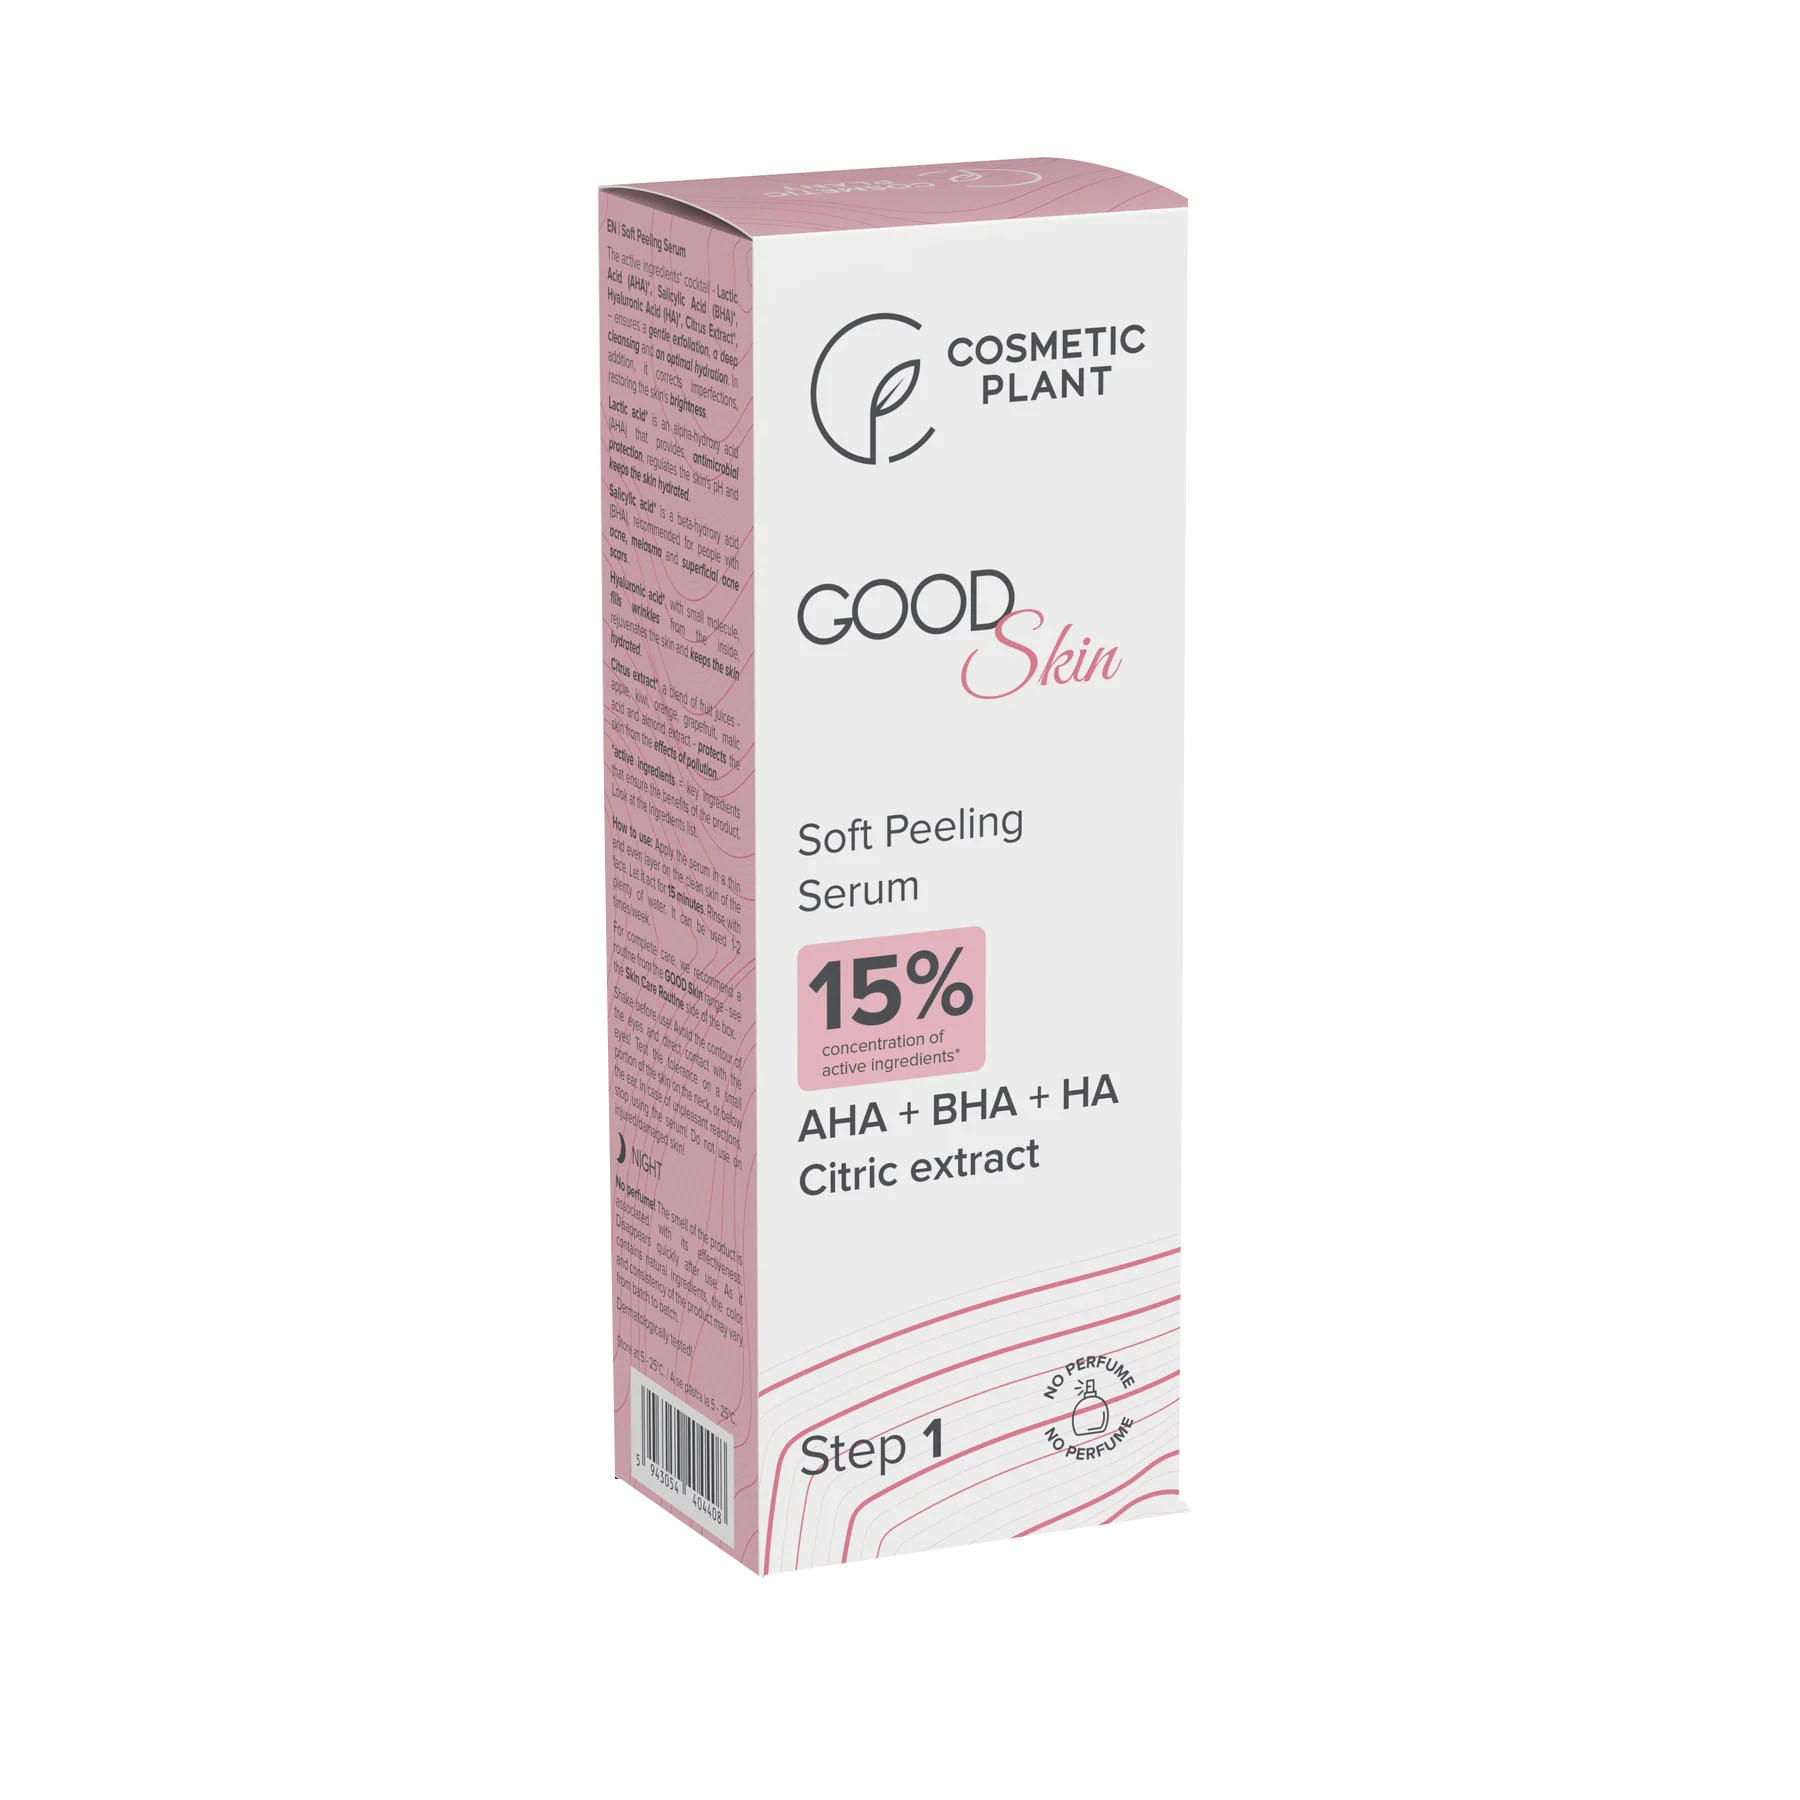 Good Skin Soft Peeling Serum cu AHA + BHA + HA si Extract de Citrice 30 mililitri Cosmetic Plant